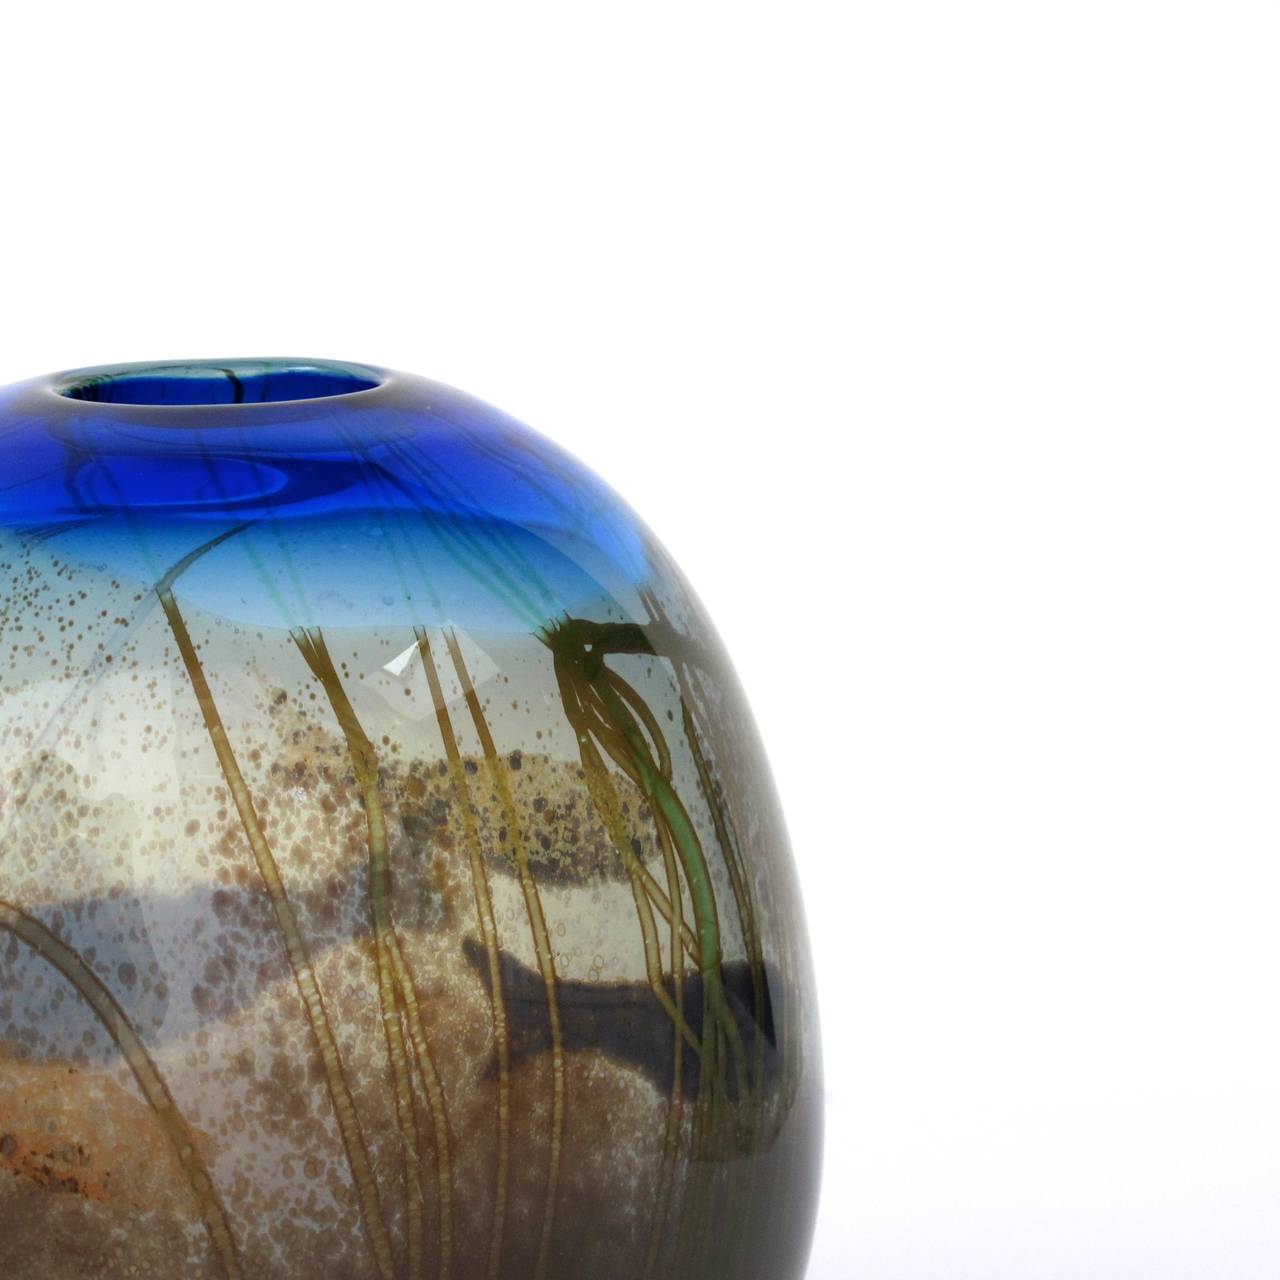 One-Off Willem Heesen Glass Vase, De Oude Horn, Under Water Landscape with Fish 2